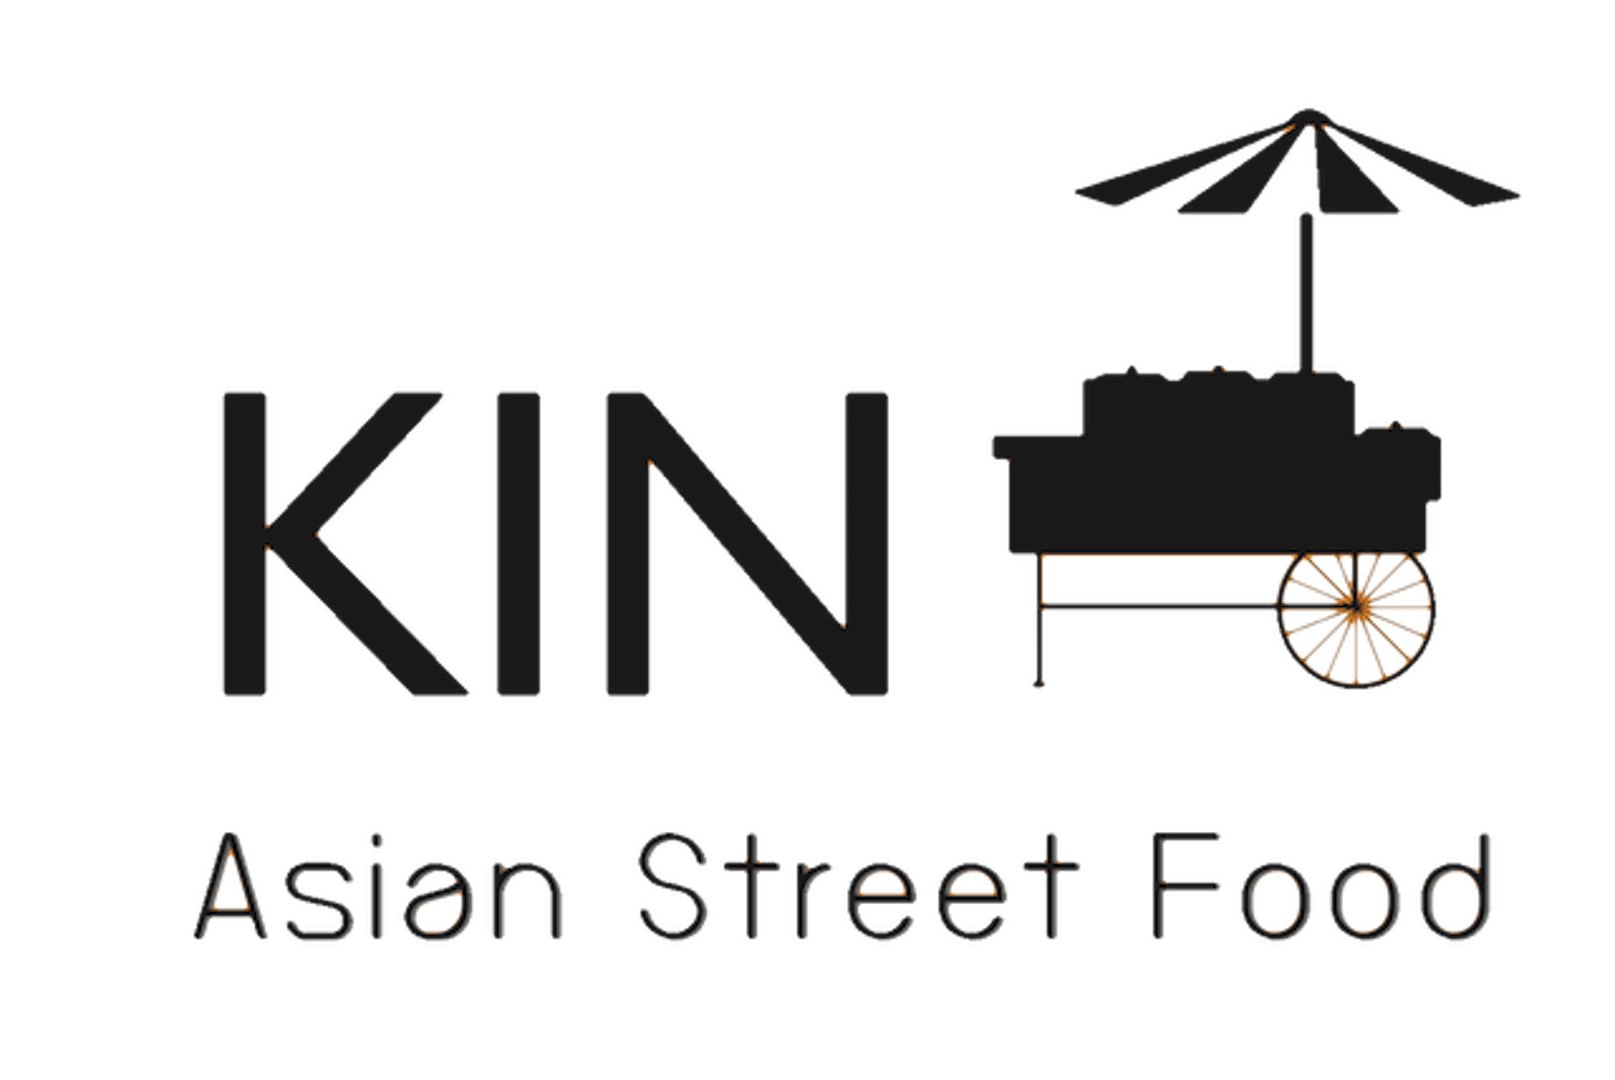 Kin Asian Street Food